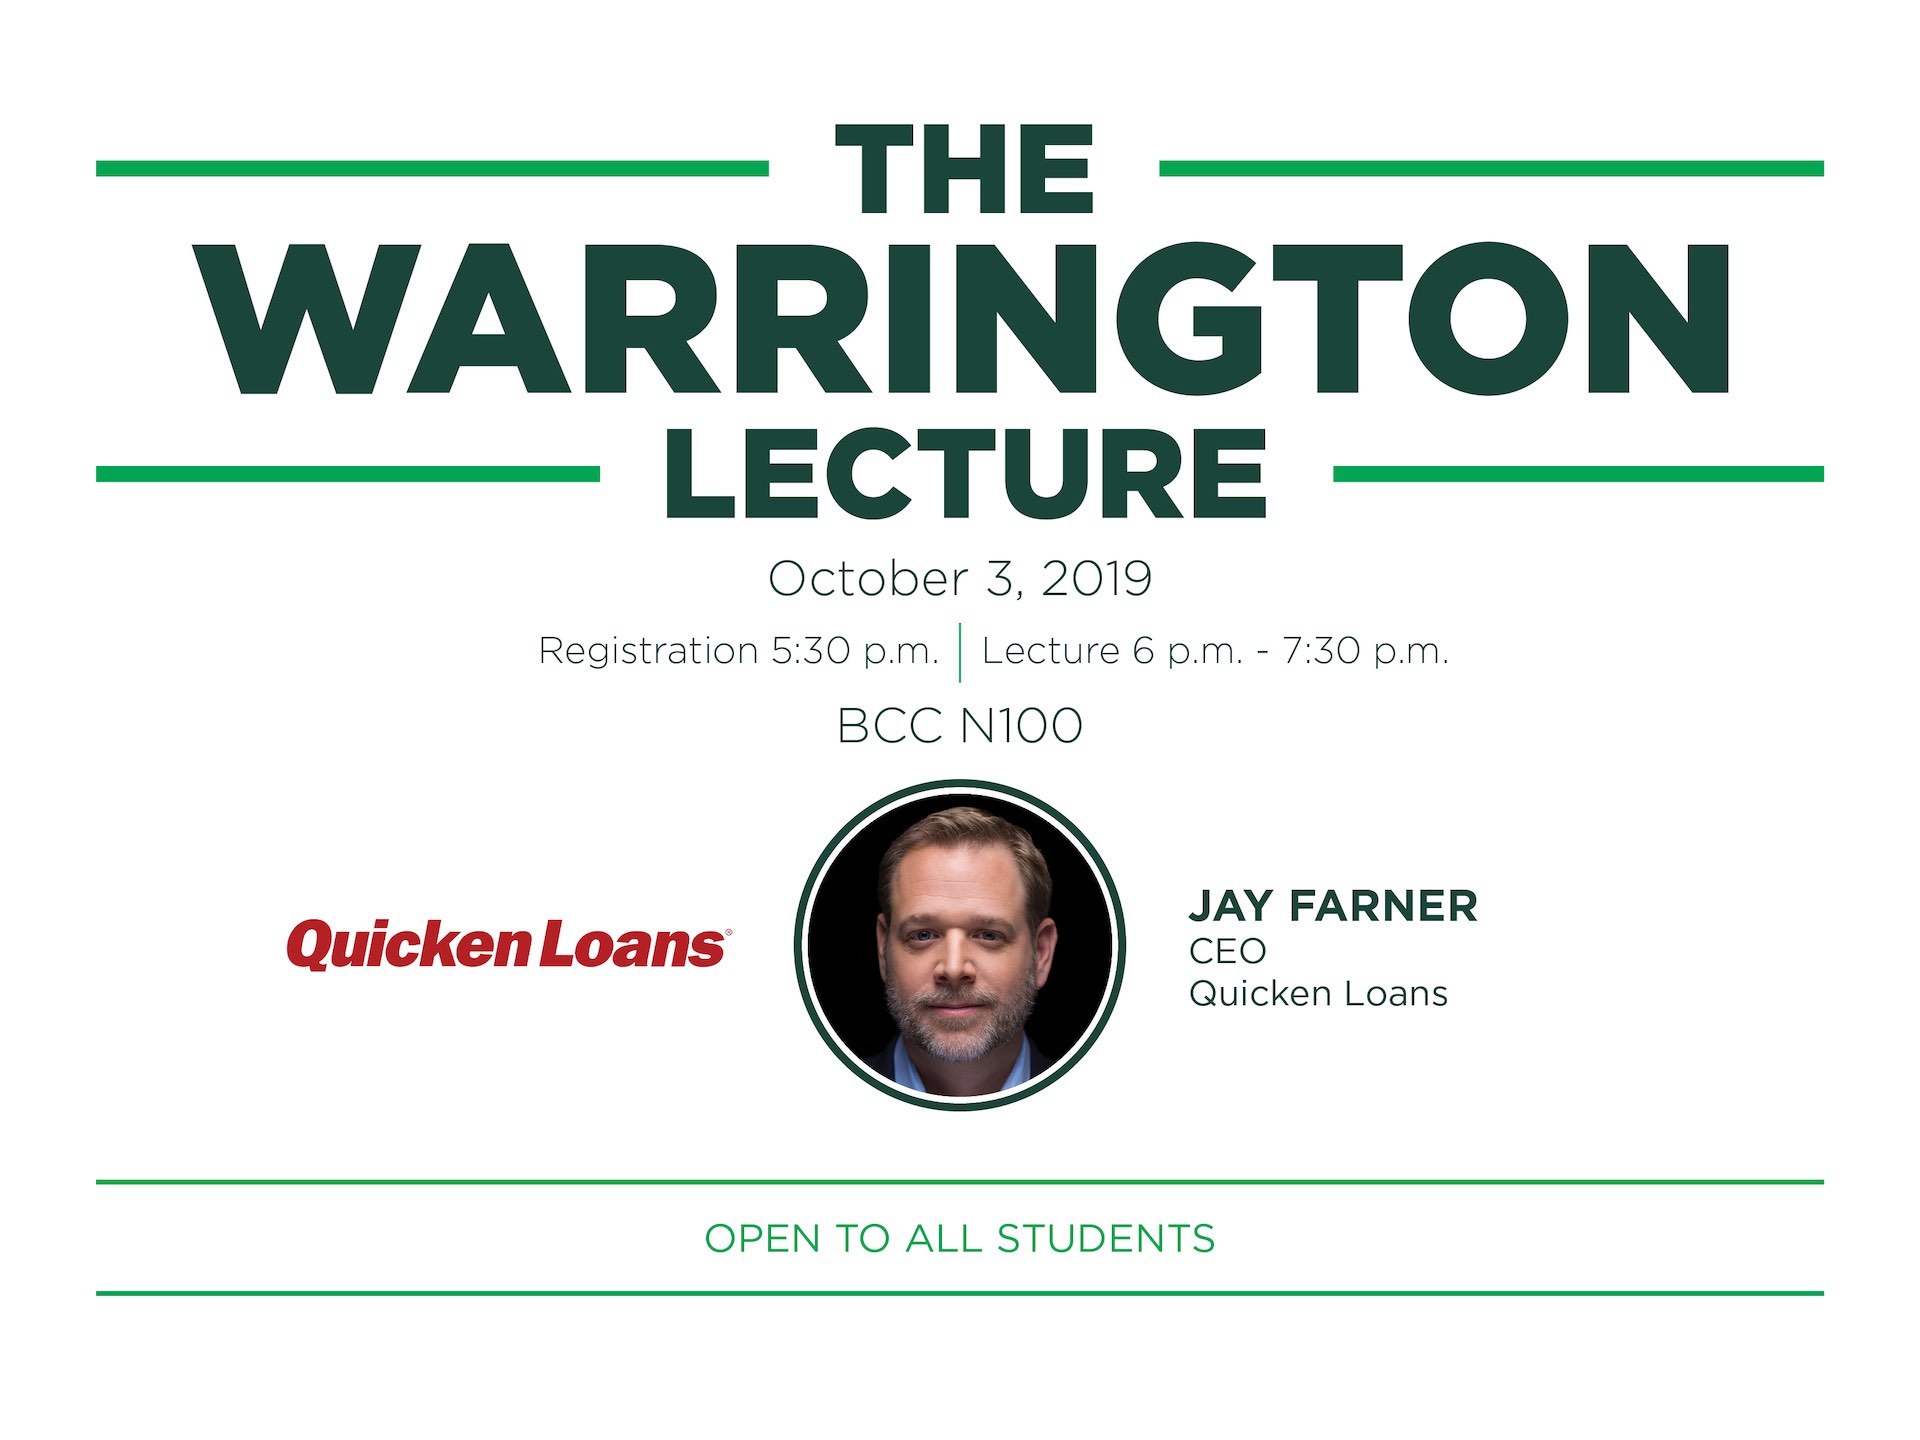 Warrington Lecture promotional slide